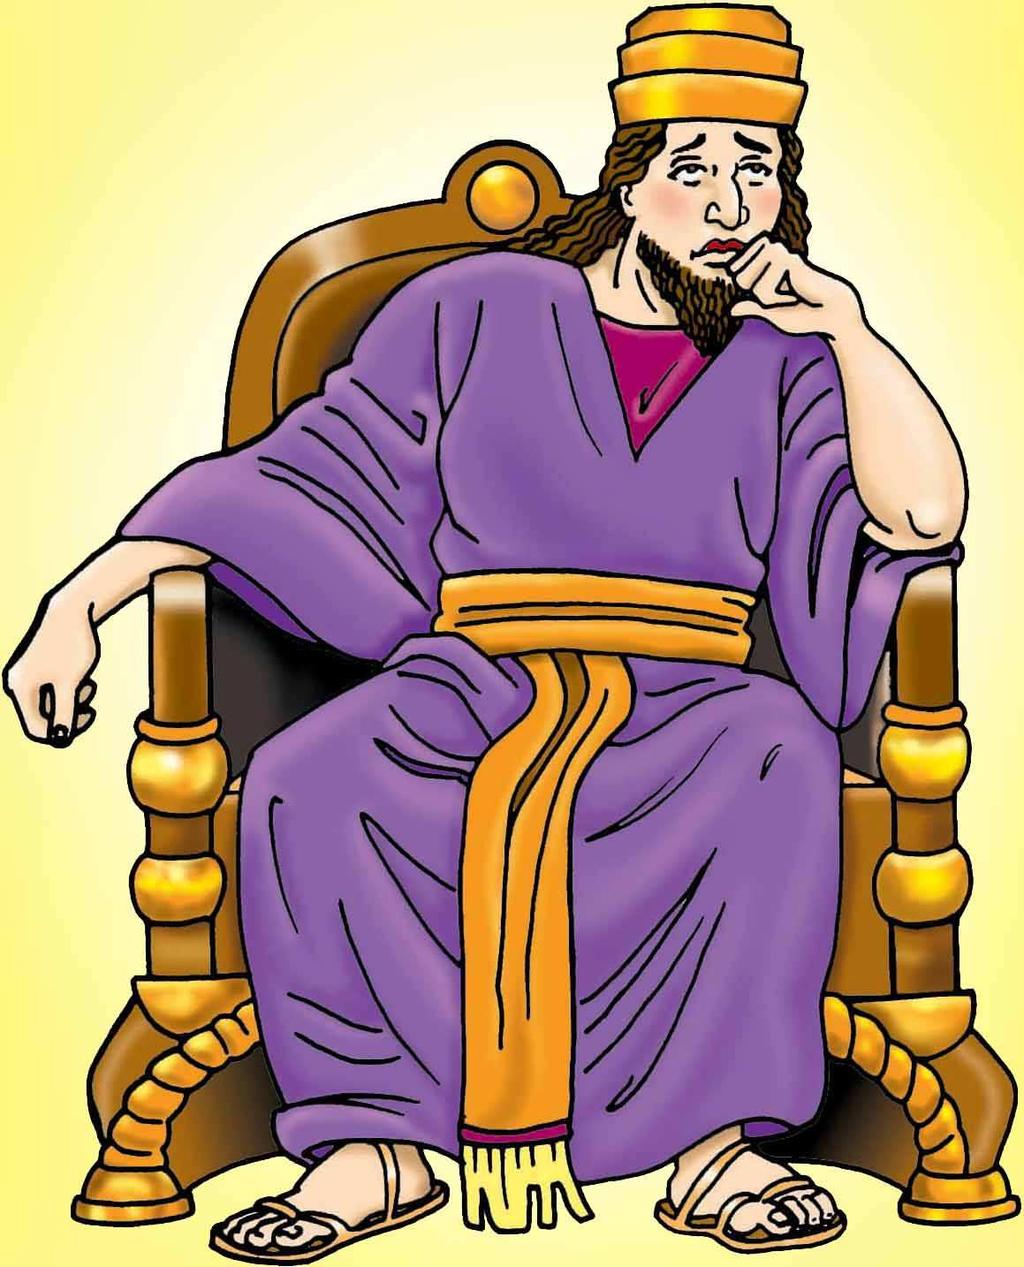 Illustrationsbild 3 Der König wurde böse.